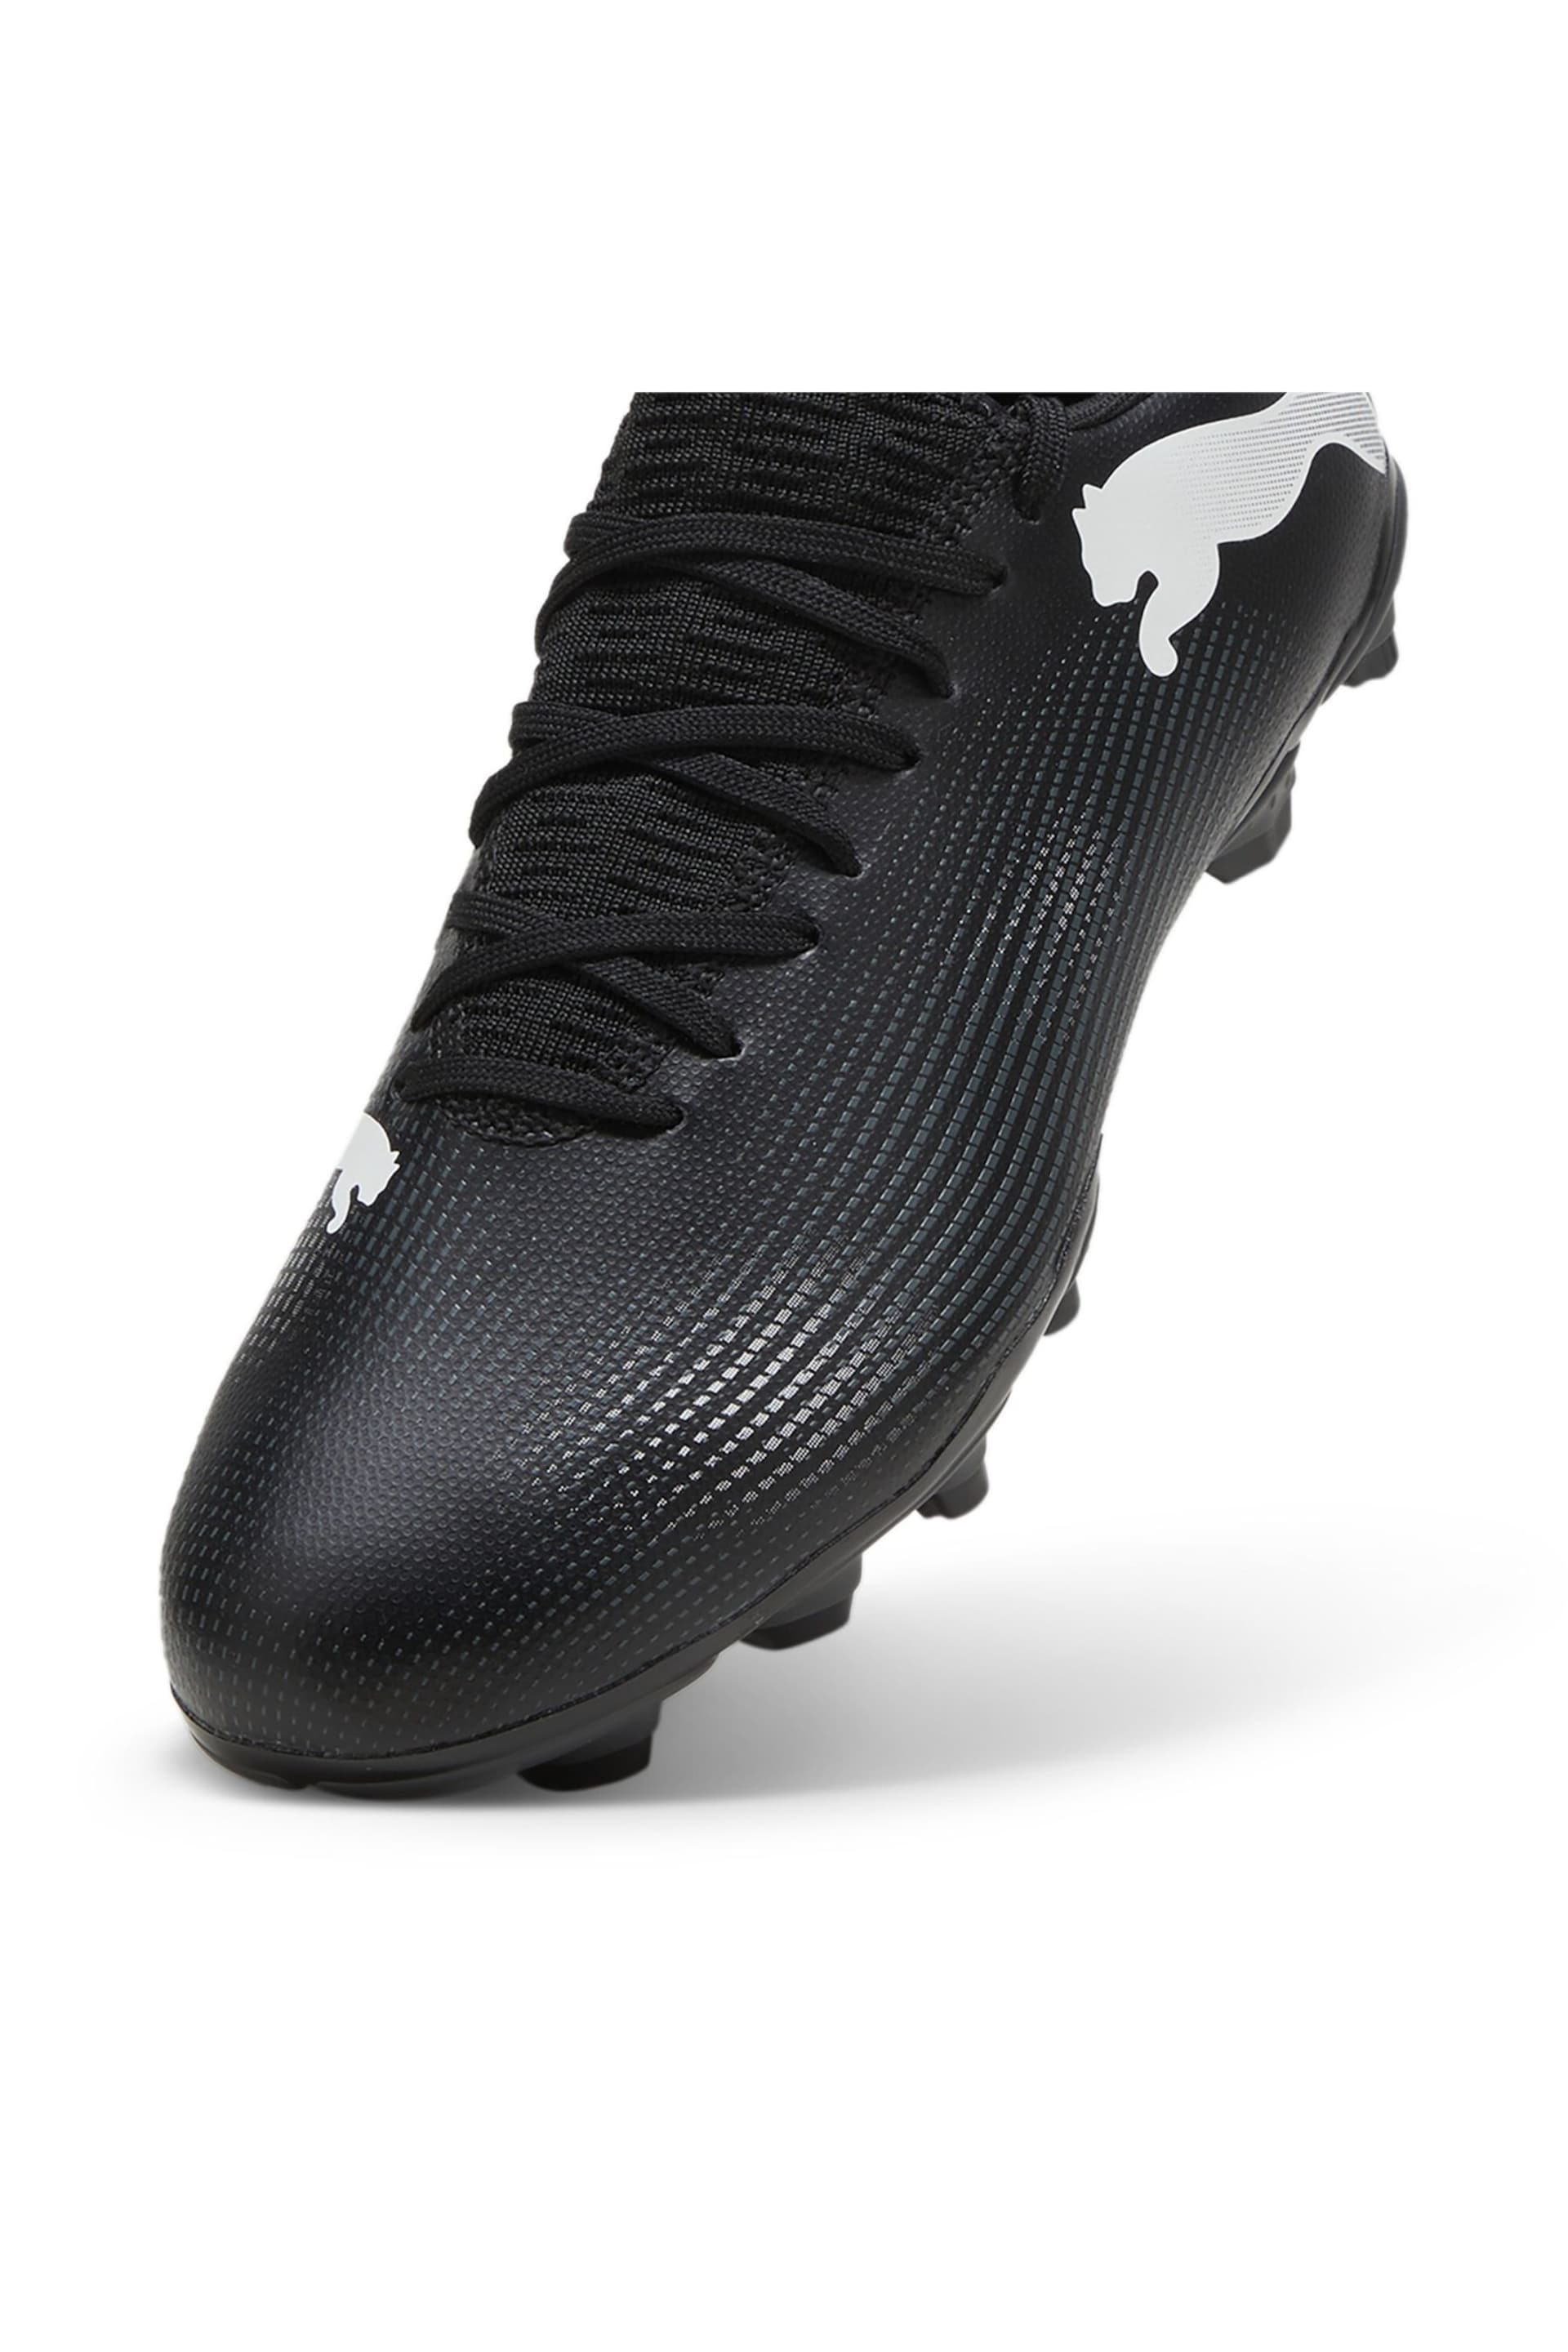 Puma Black Future 7 Play Football Boots - Image 6 of 7